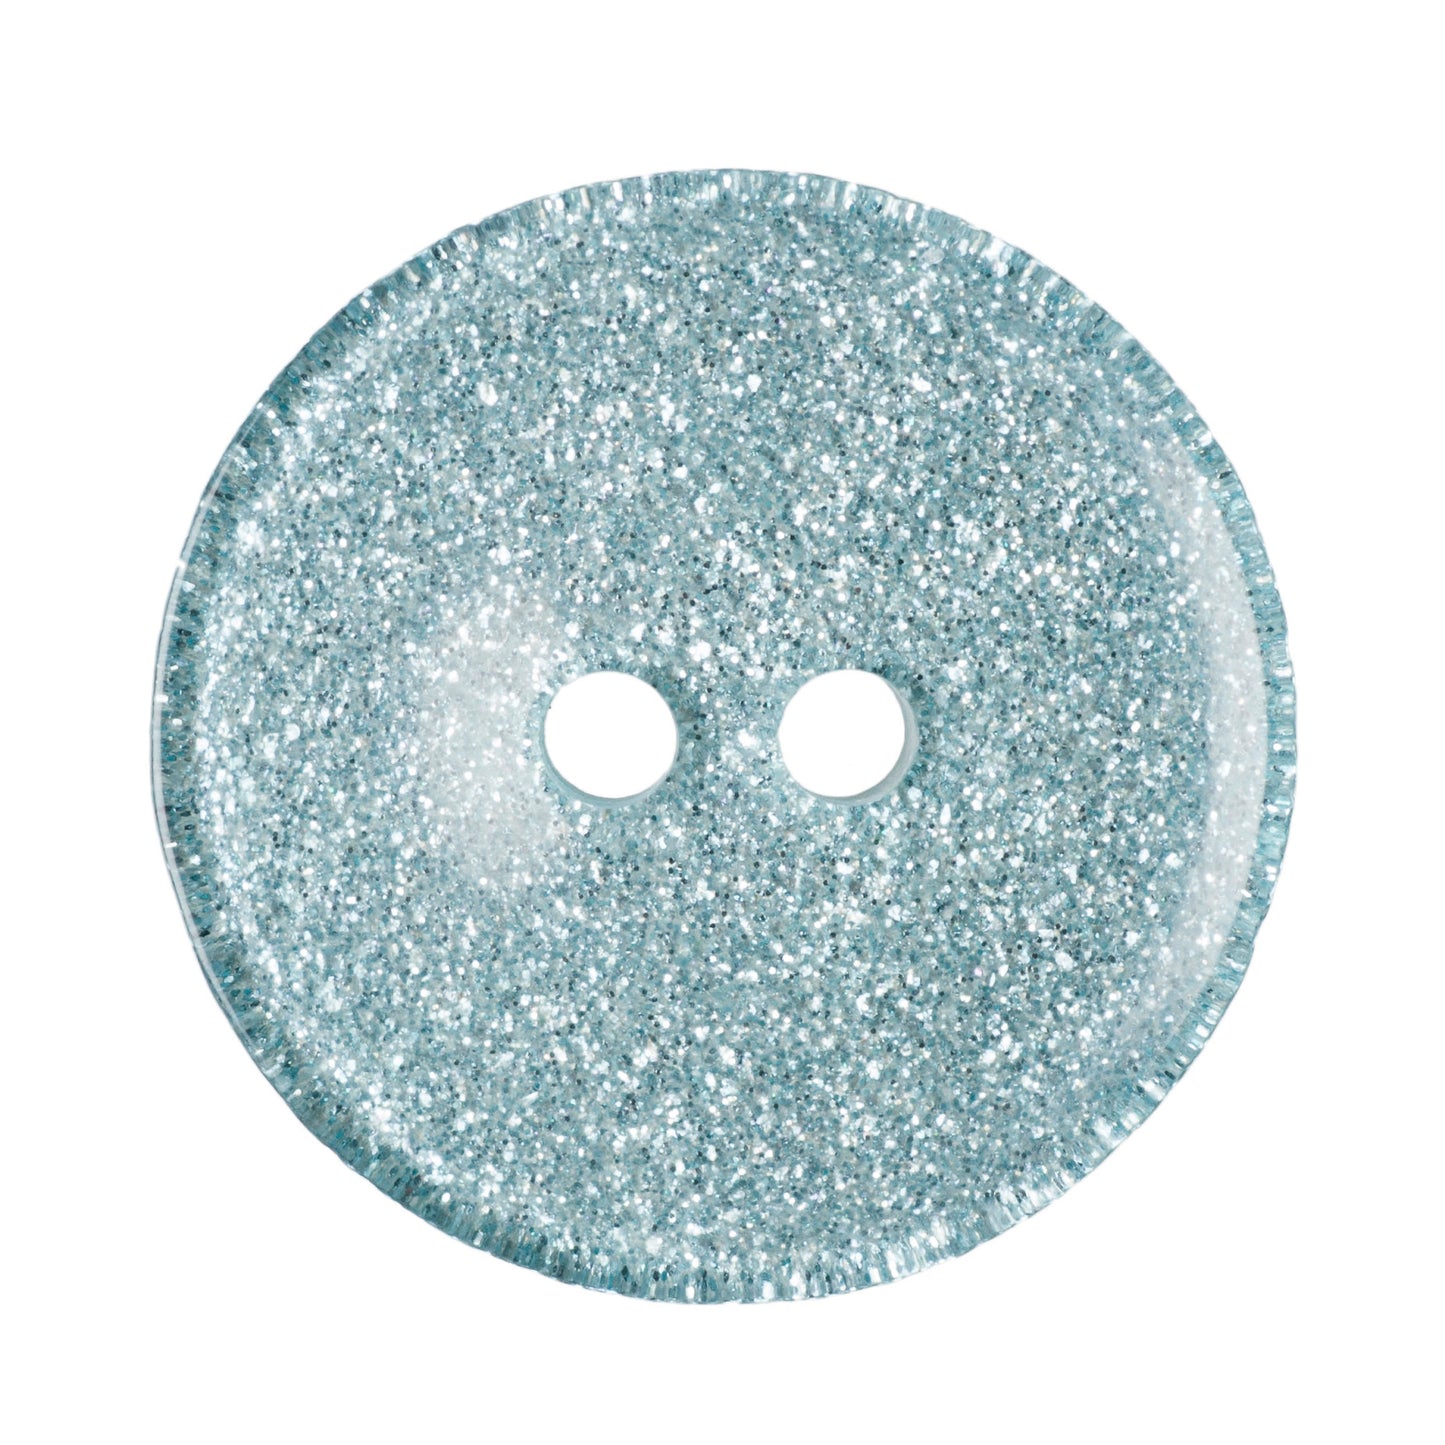 2 Hole Round Glitter Button - 20mm - Light Blue